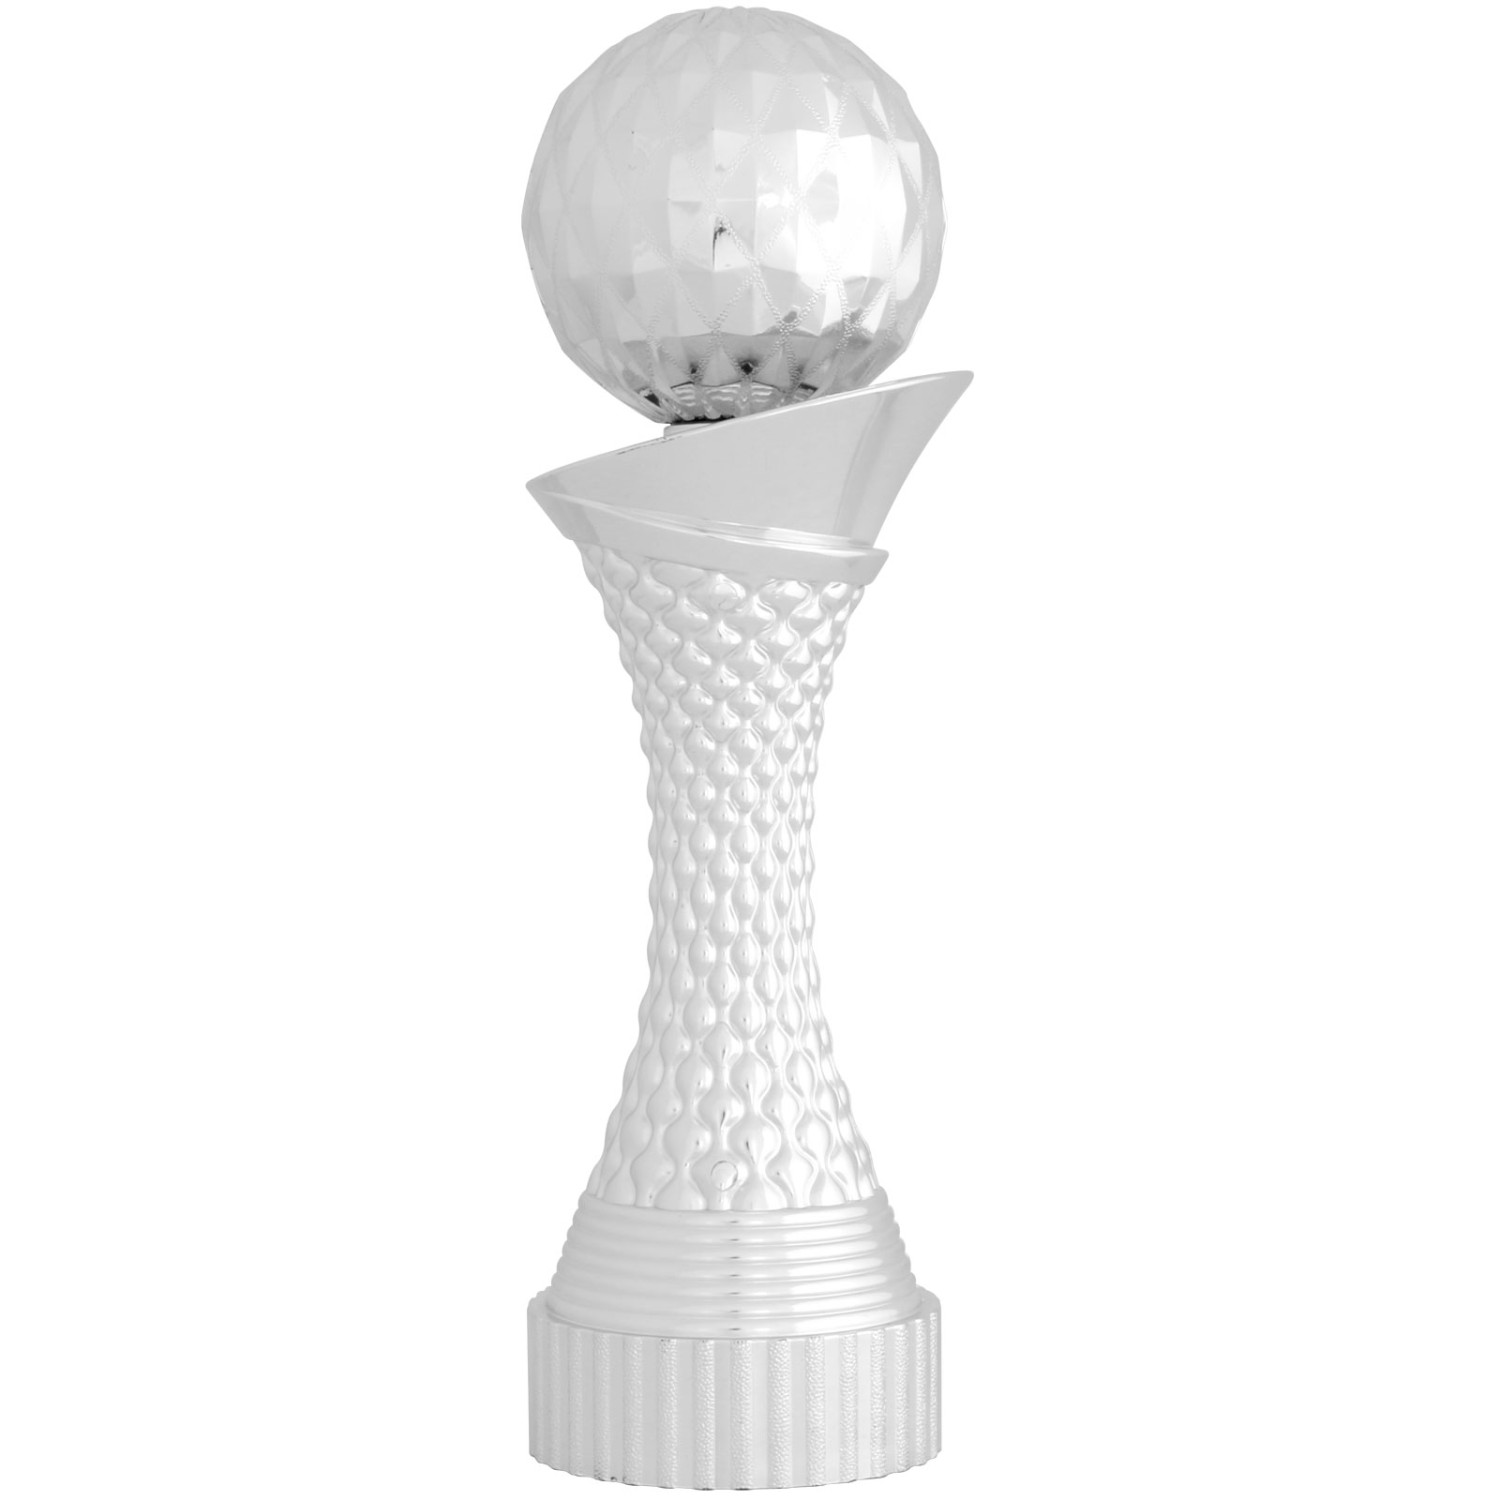 1. Foto Bowling Pokal AVORD Kegeln Strike silber mit Gravur (Größe: M 25cm hoch)